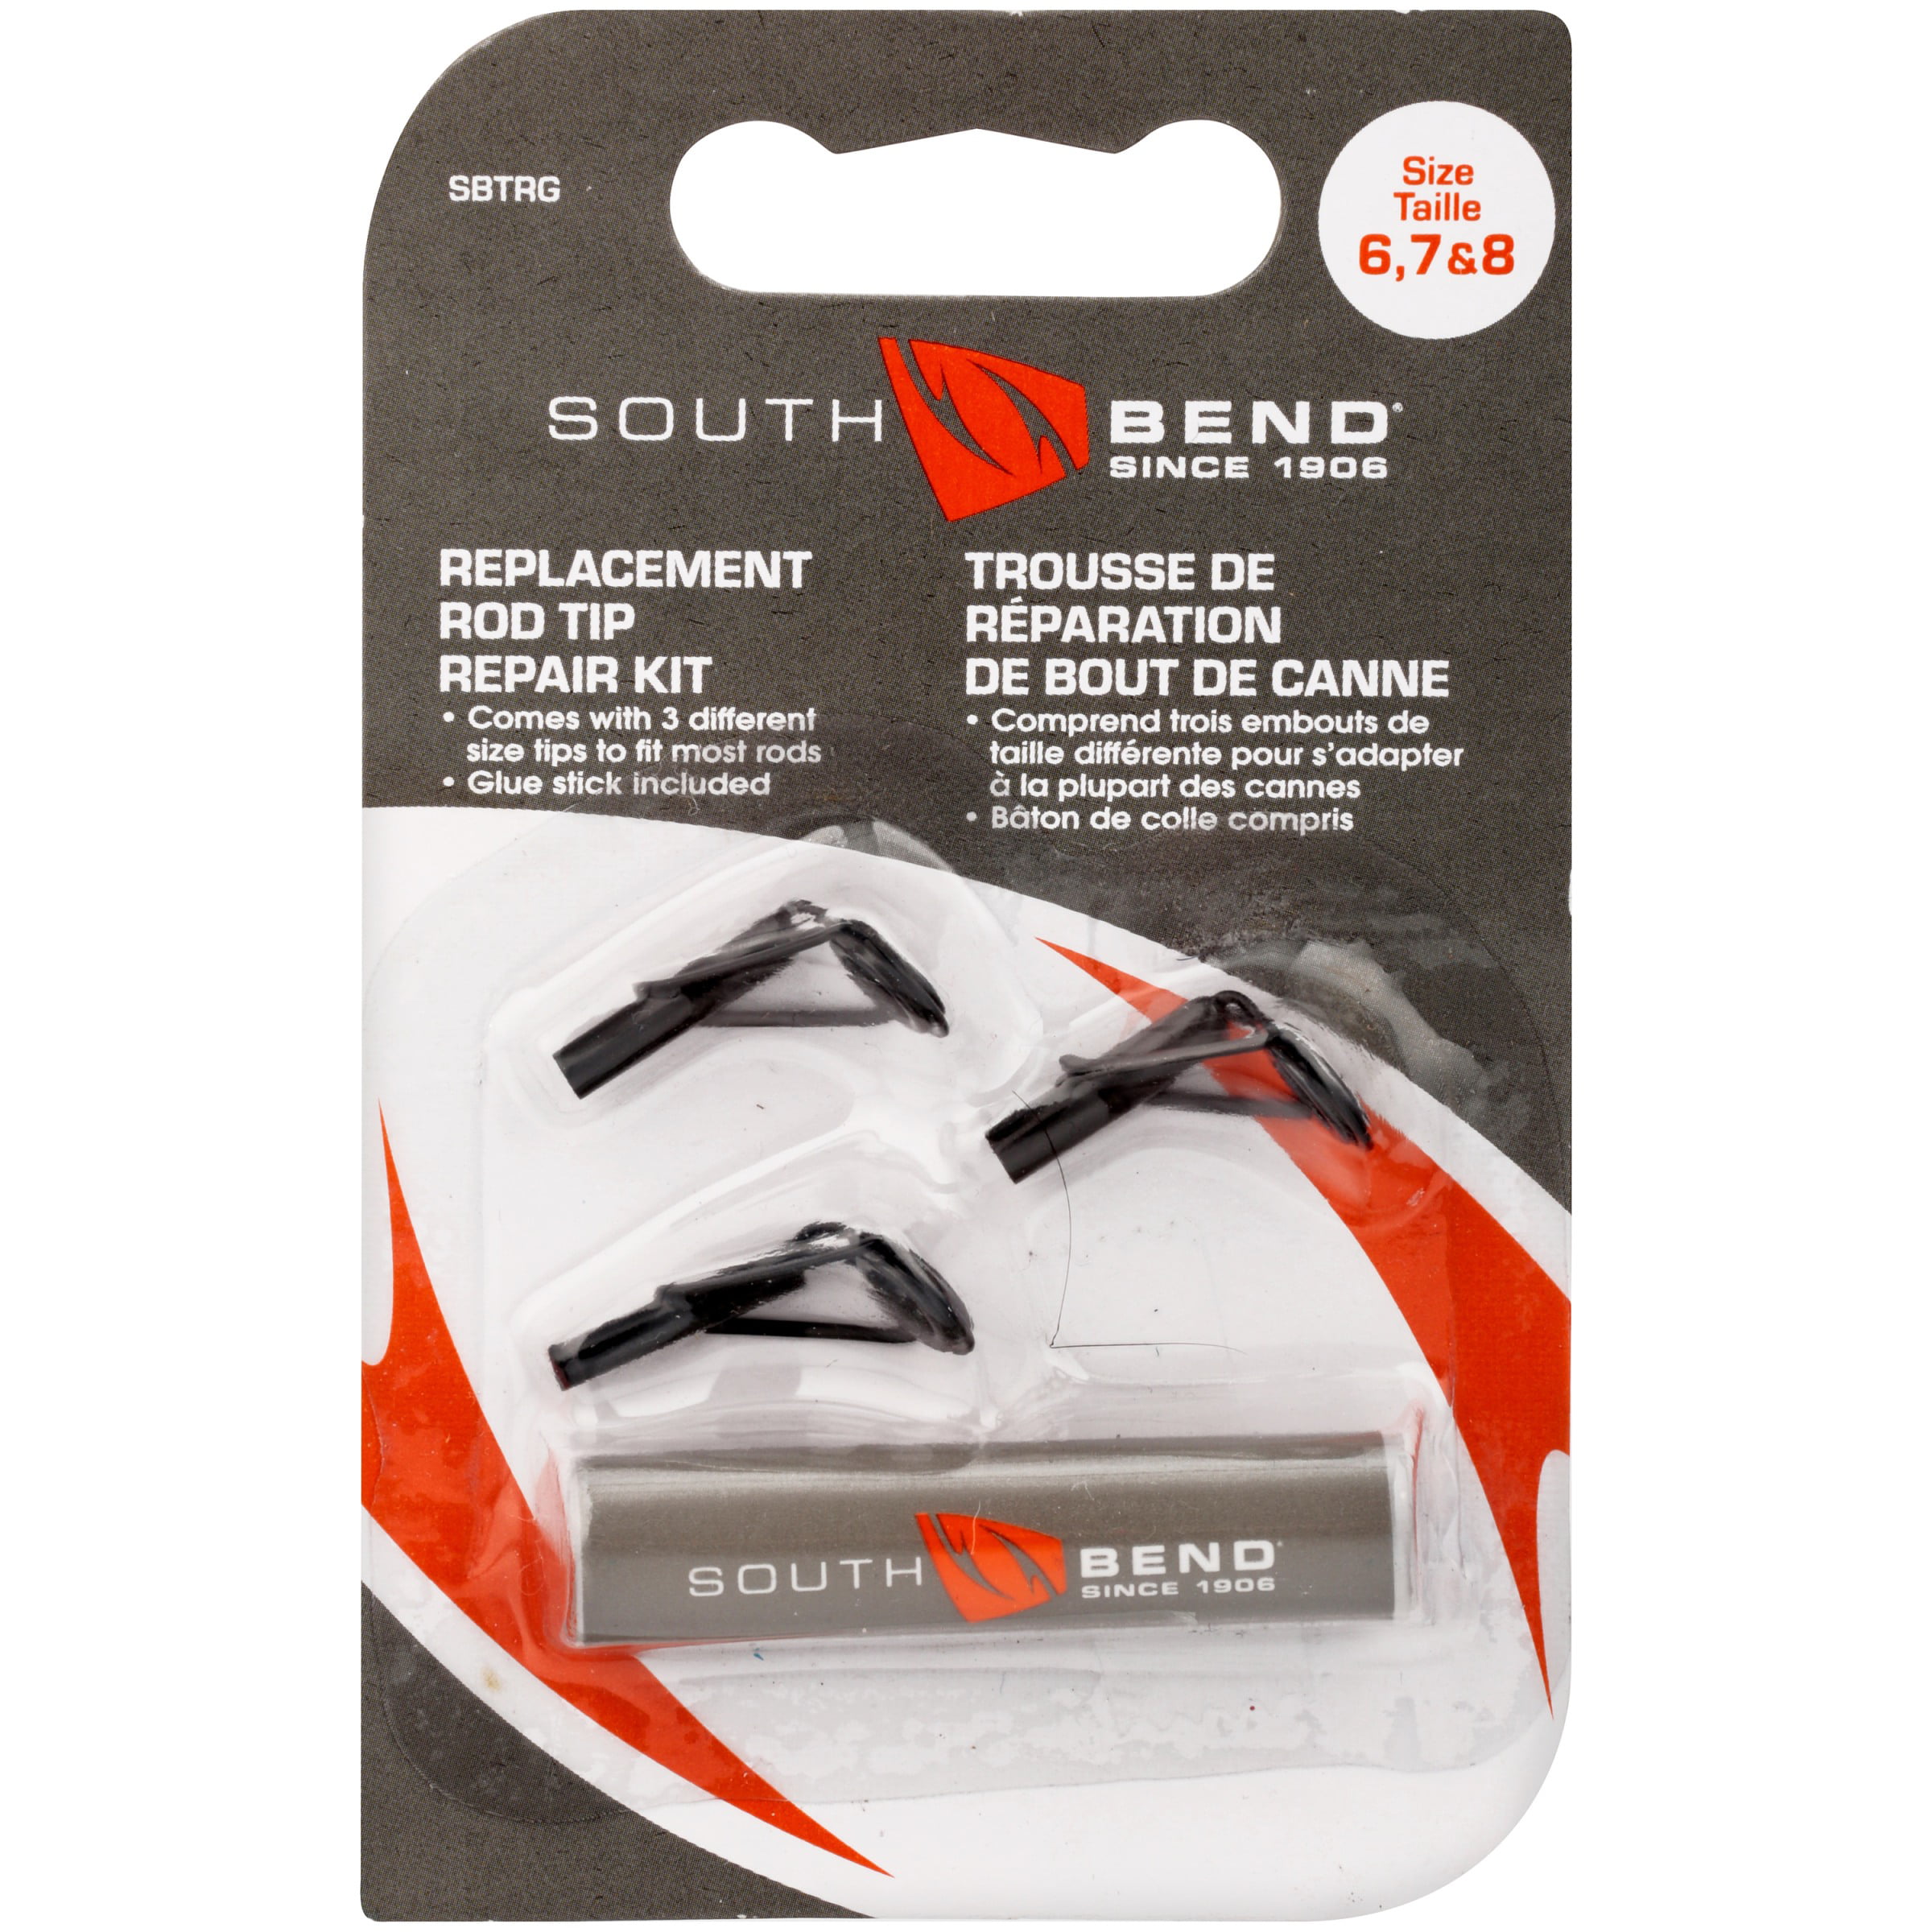 South Bend Replacement Fishing Rod Tip Repair Kit, 4-pack 